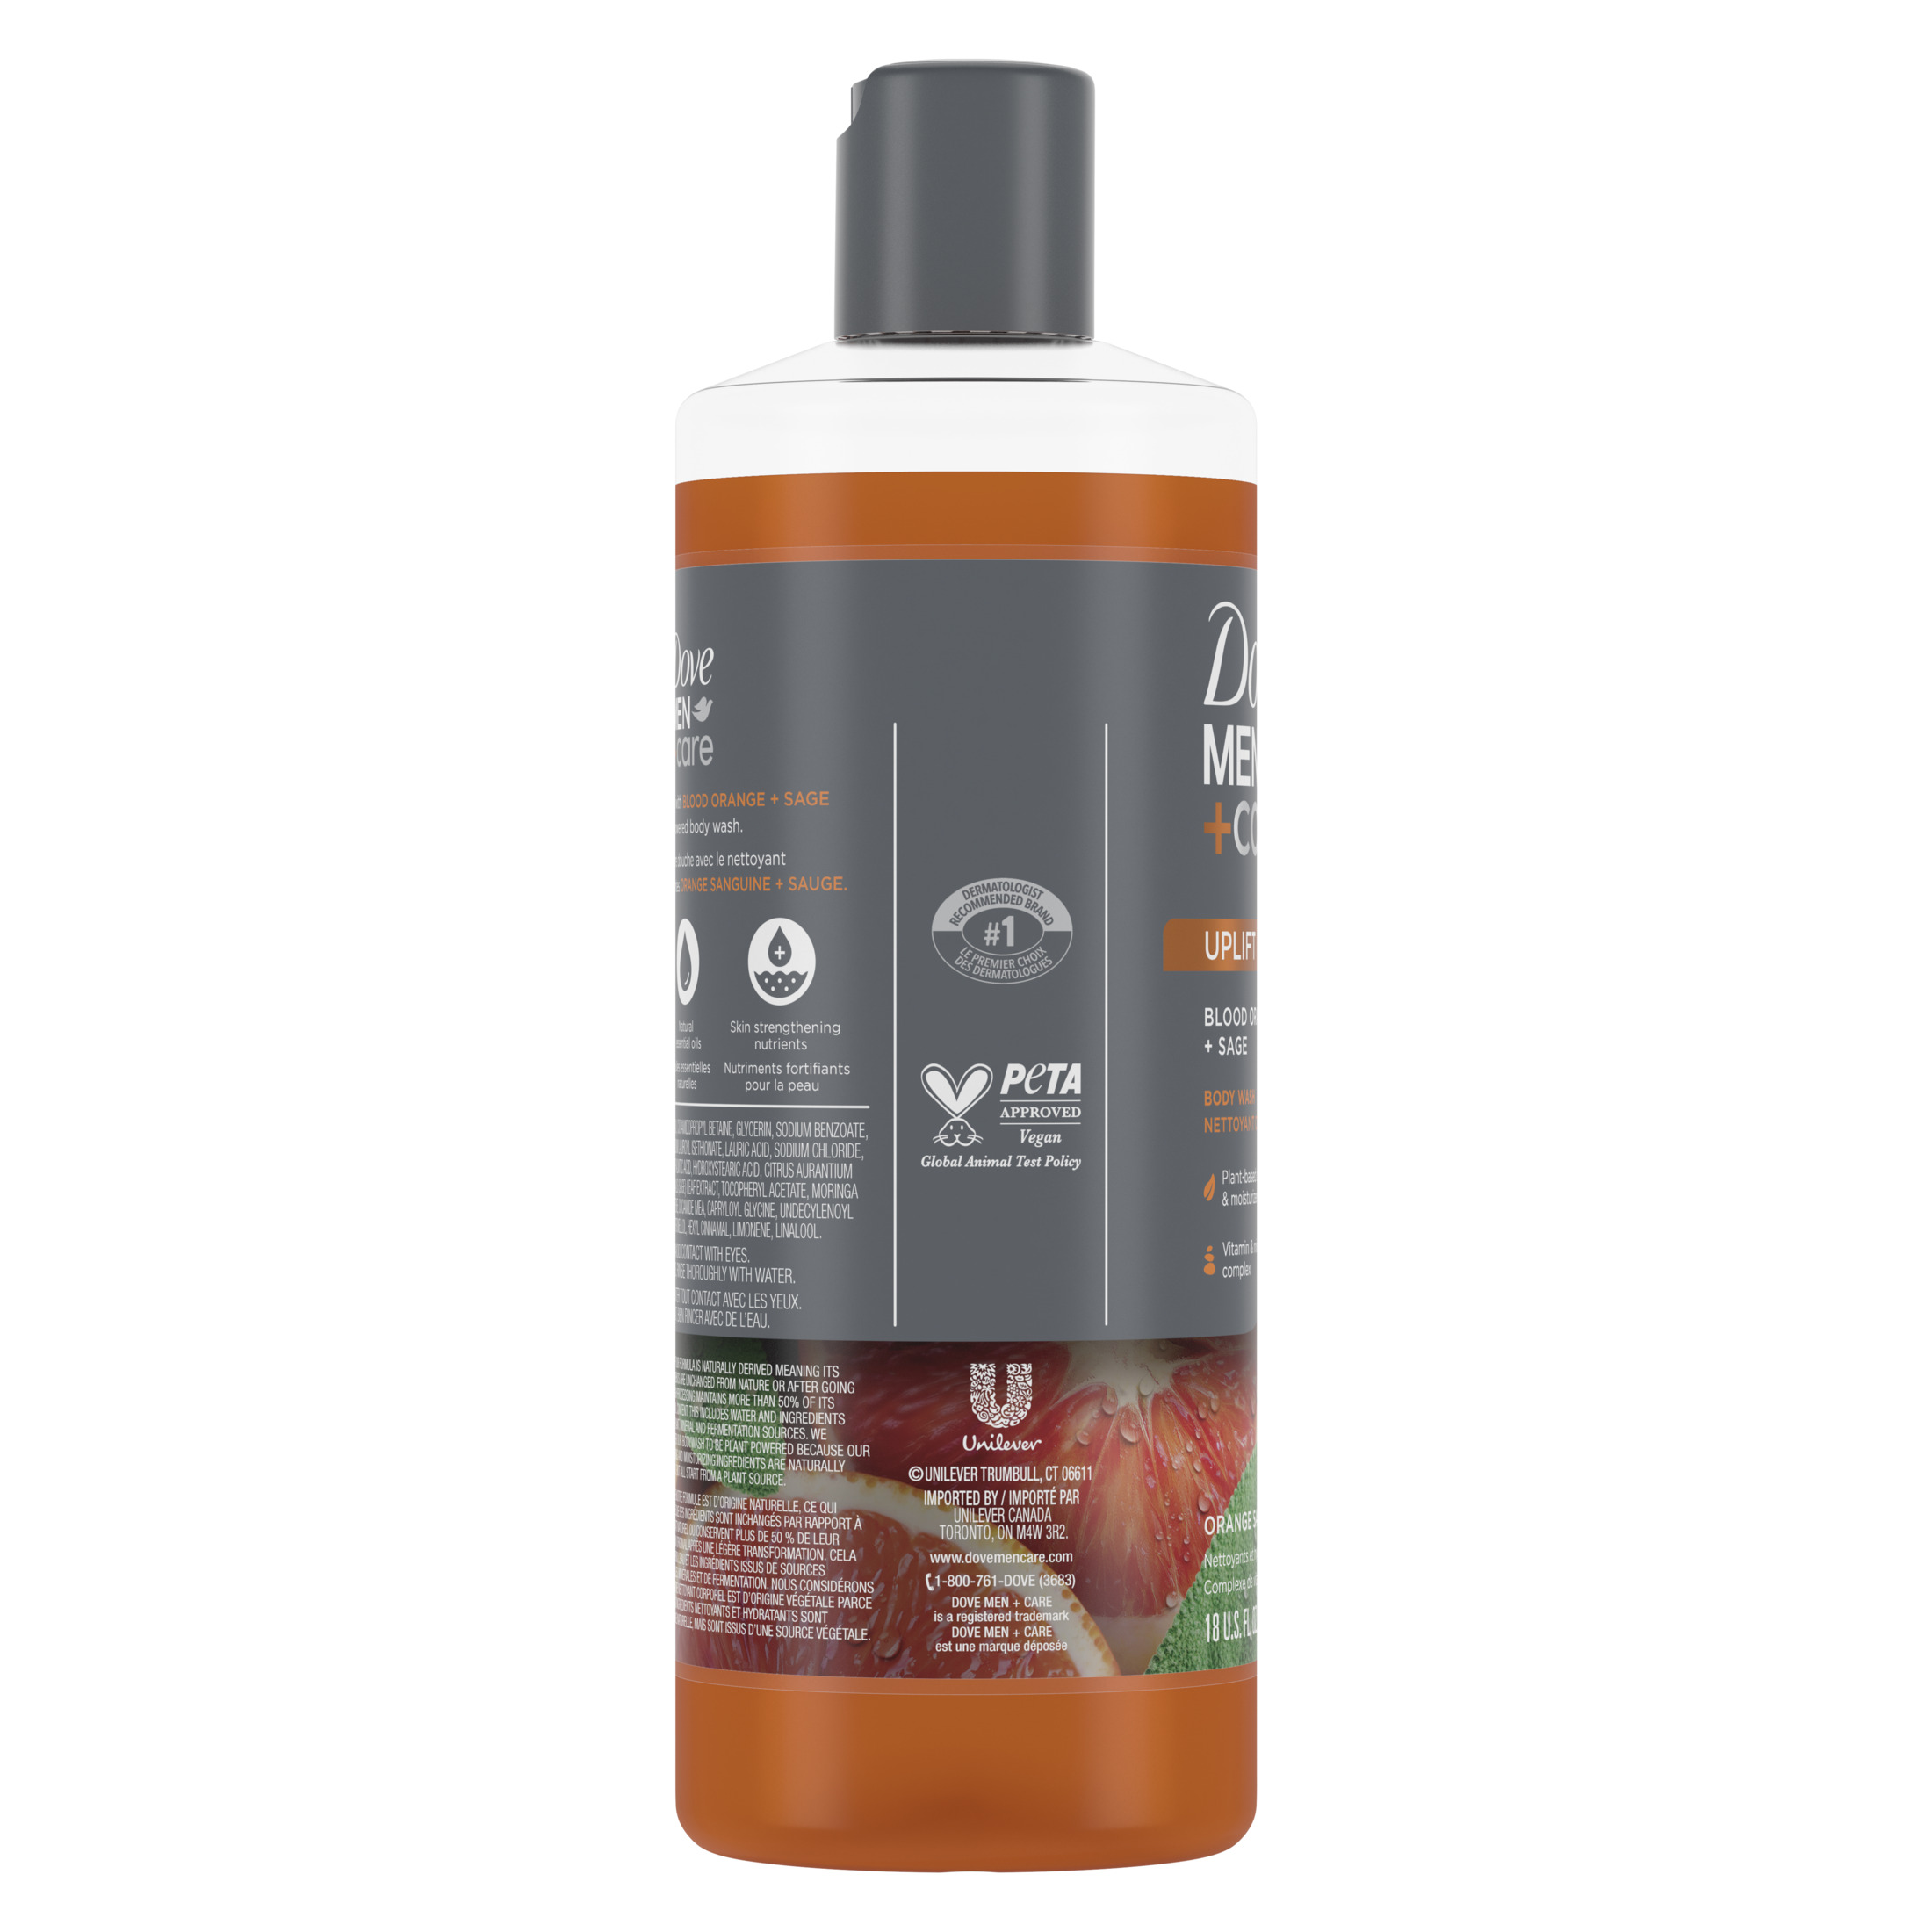 Dove Men+Care Liquid Body Wash Blood Orange + Sage, Plant-Based Cleanser All Skin Type, 18 oz - image 5 of 8